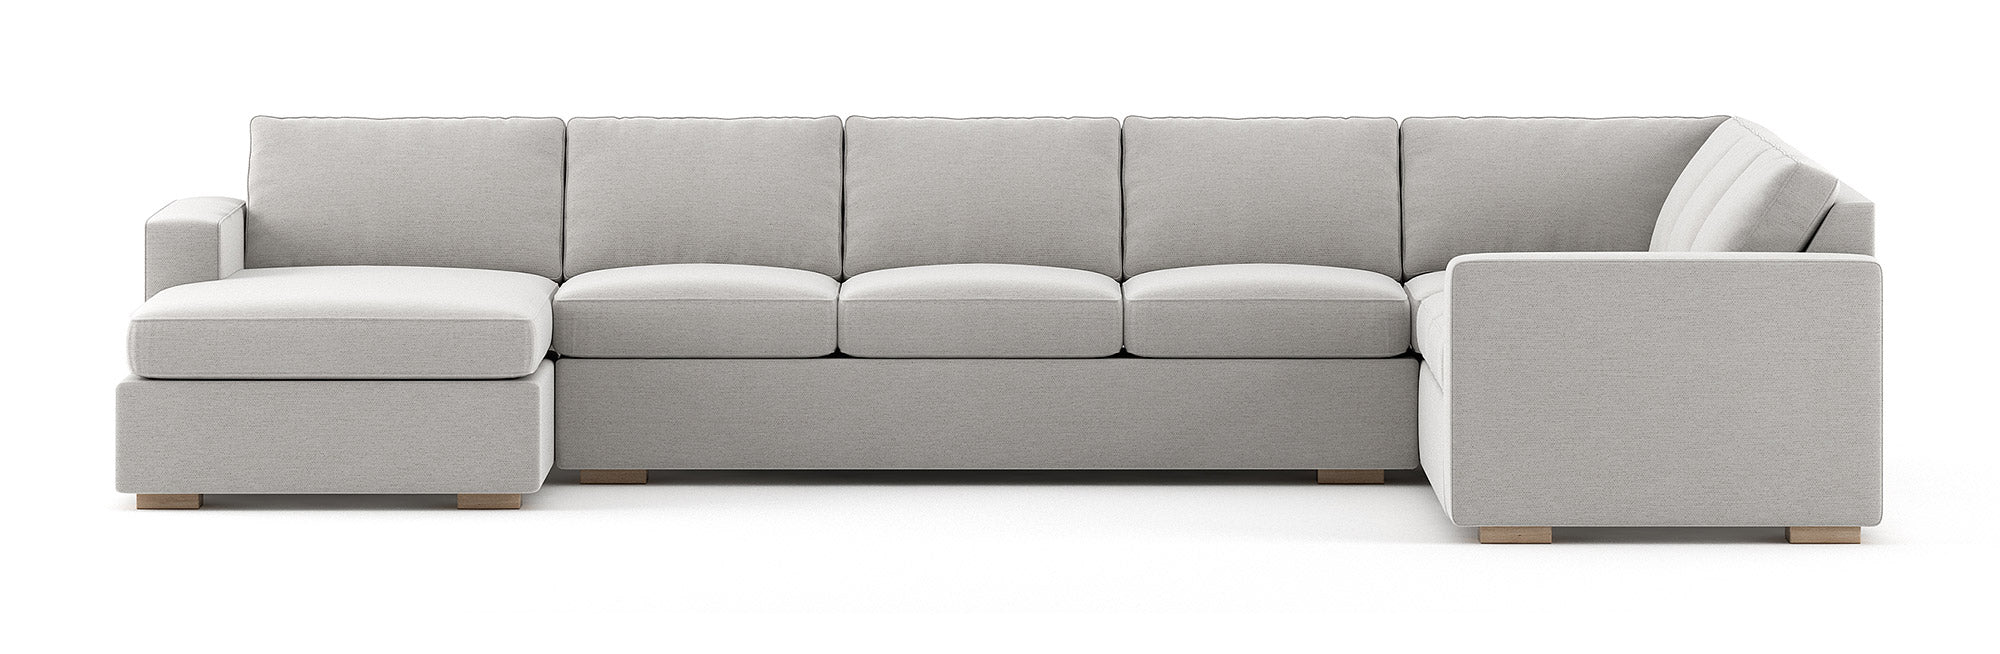 Rio Modern Sofa